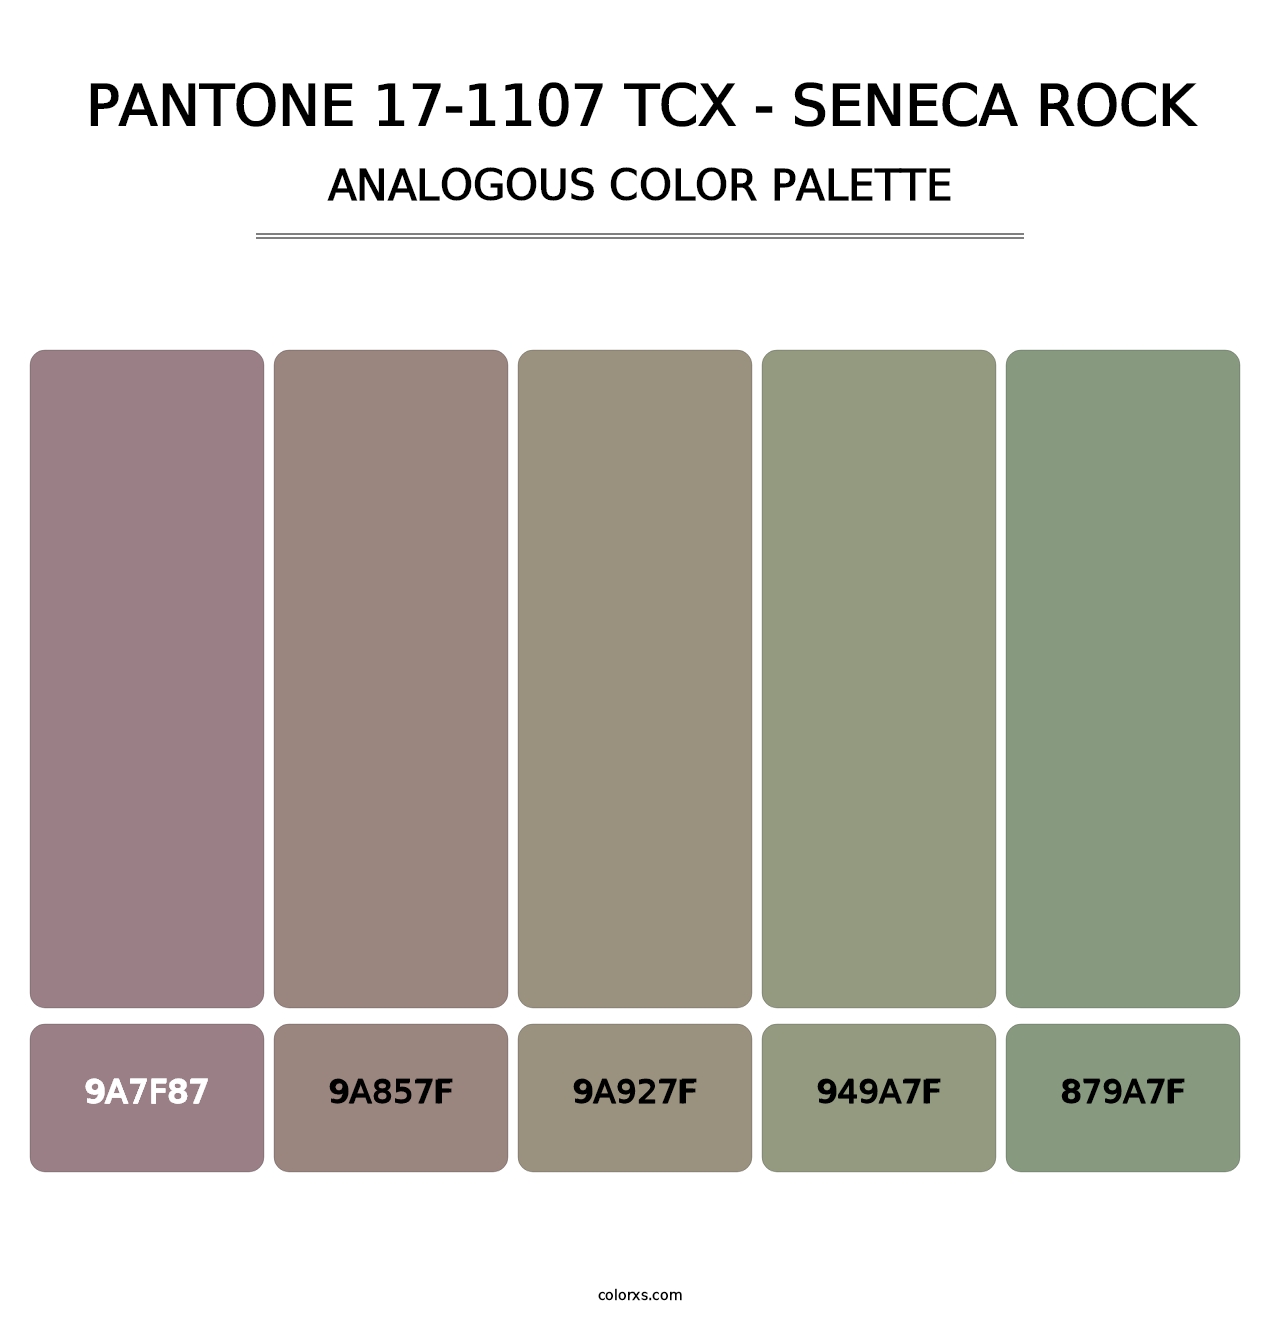 PANTONE 17-1107 TCX - Seneca Rock - Analogous Color Palette